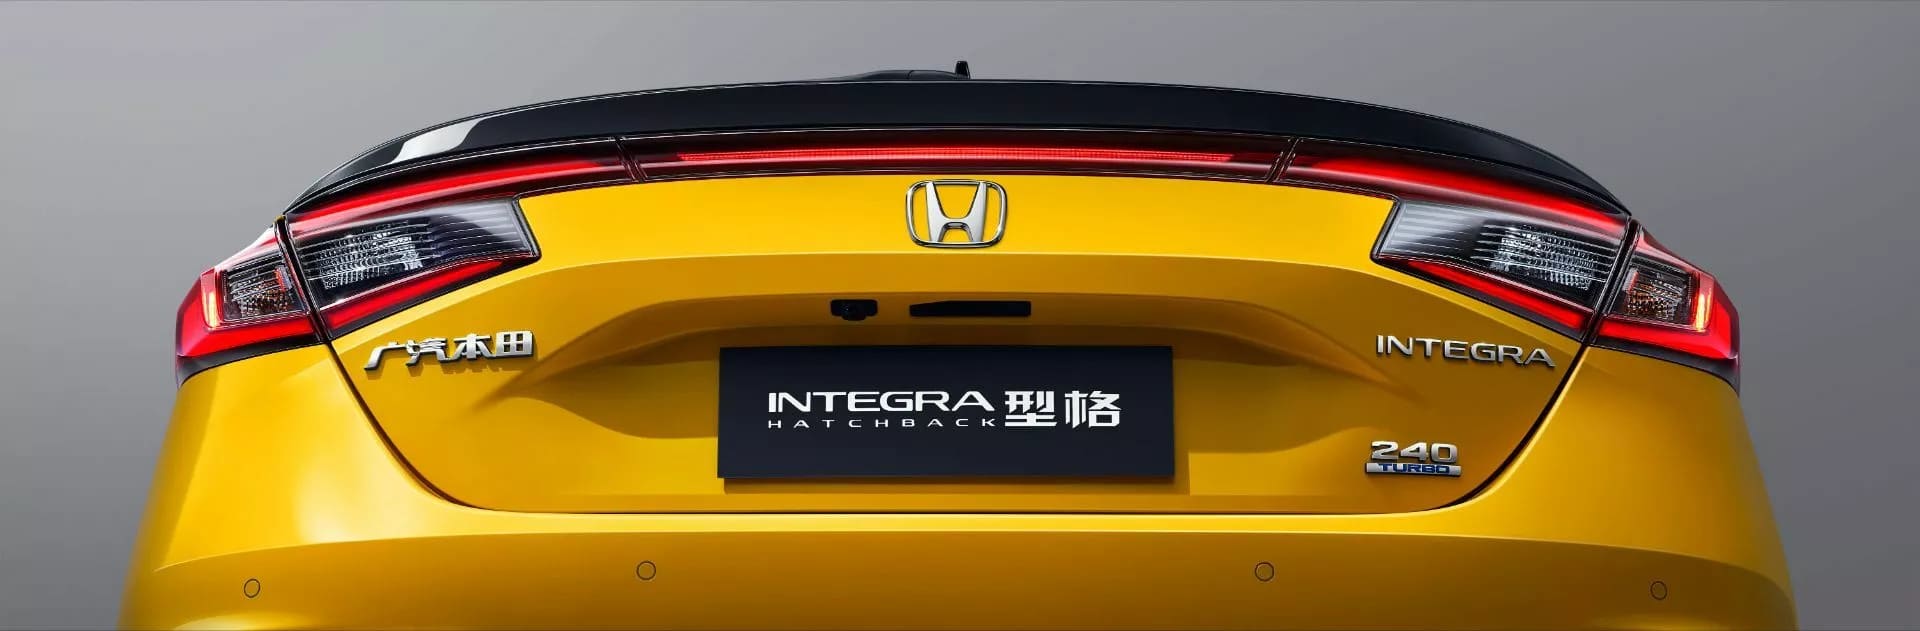 Honda-Integra-Hatchback-China-6